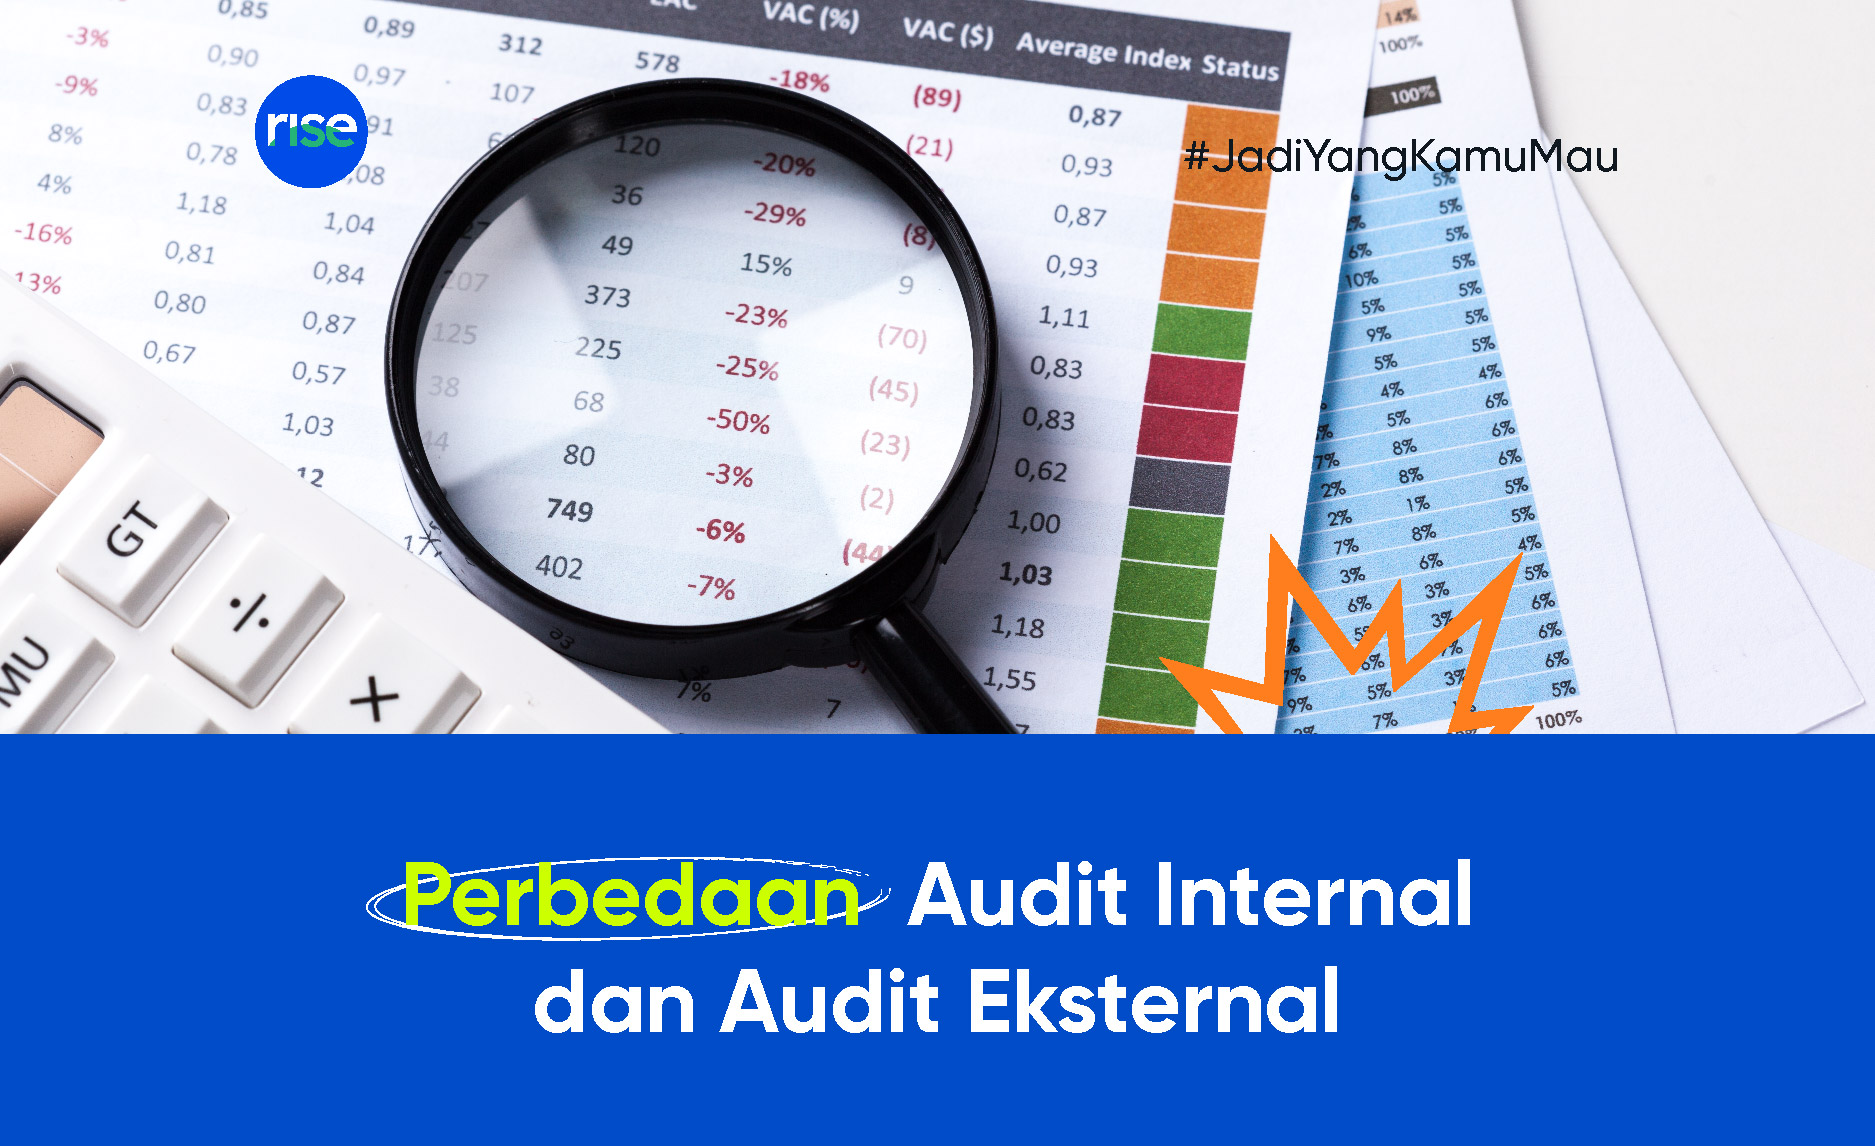 Perbedaan Audit Internal dan External